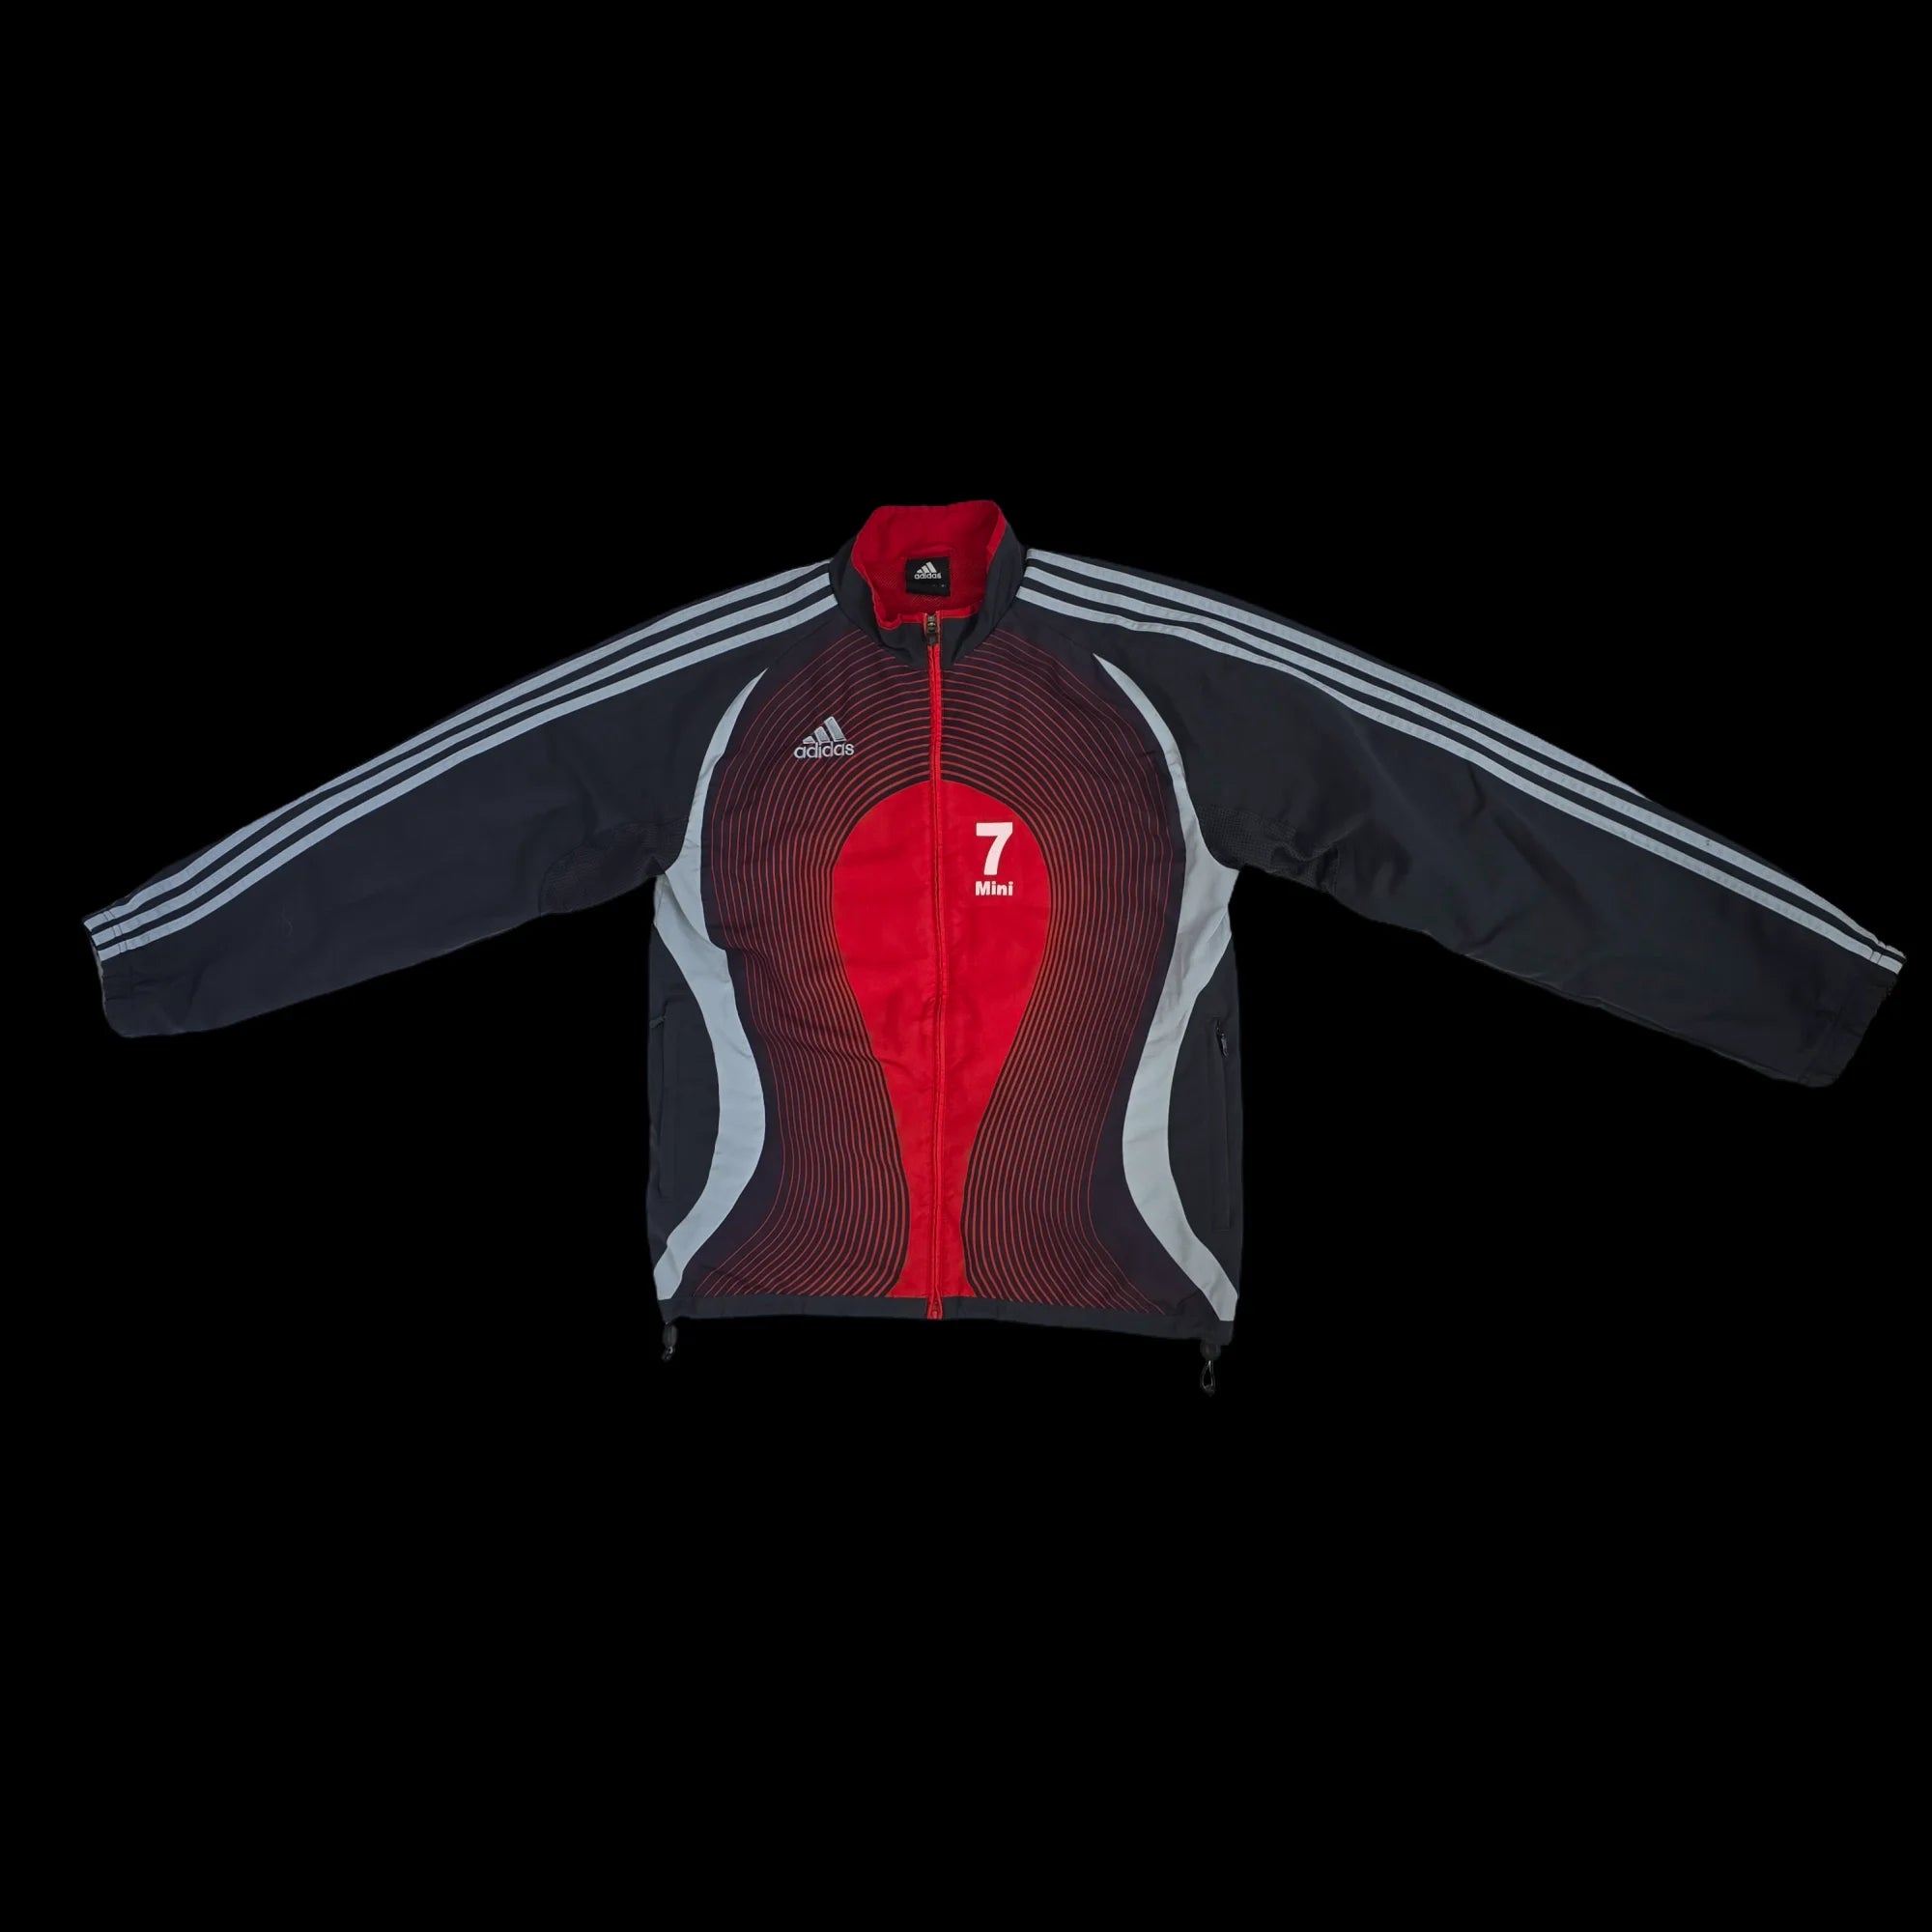 Adidas Unisex Black Red TSV Binswangen Sports Club Track